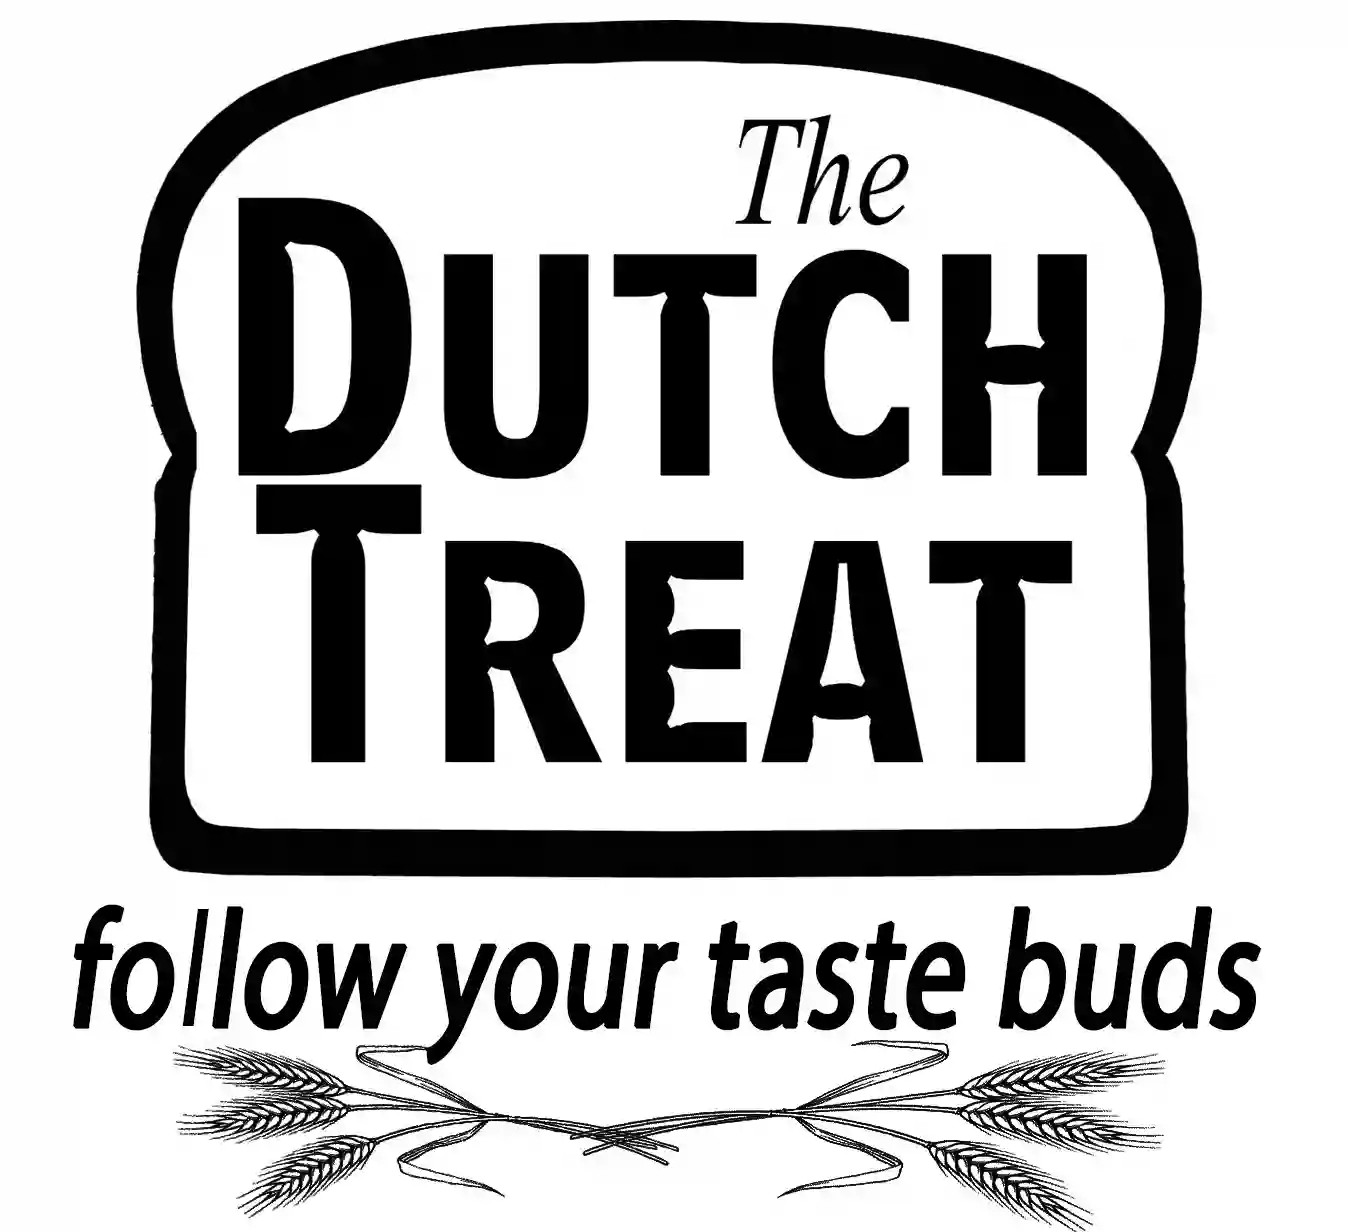 The Dutch Treat